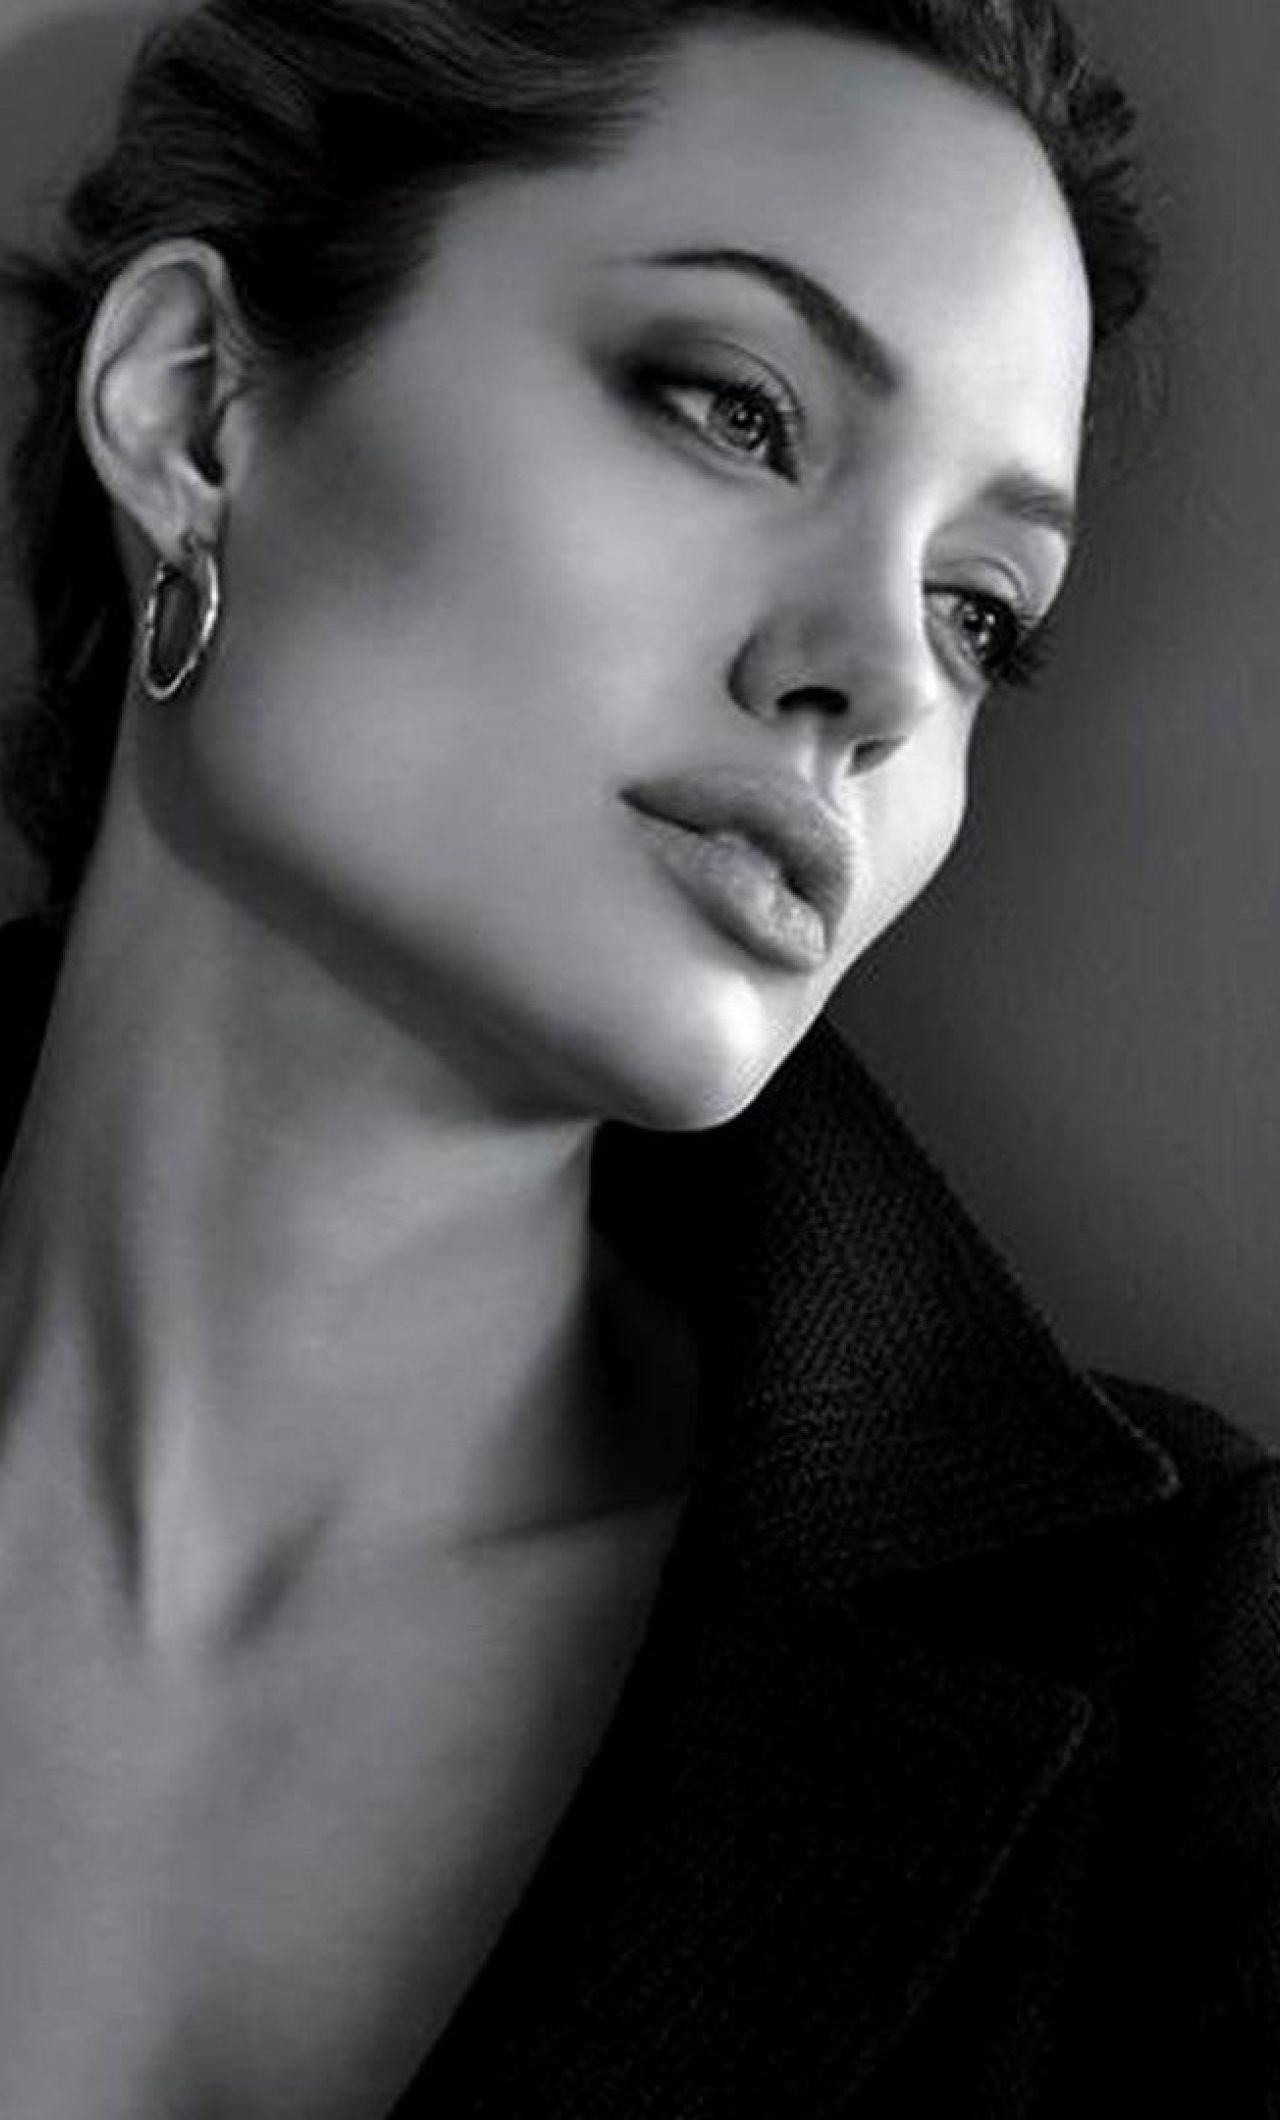 Angelina Jolie Classy HD Photohoot iPhone 6 plus Wallpaper, HD Celebrities 4K Wallpaper, Image, Photo and Background